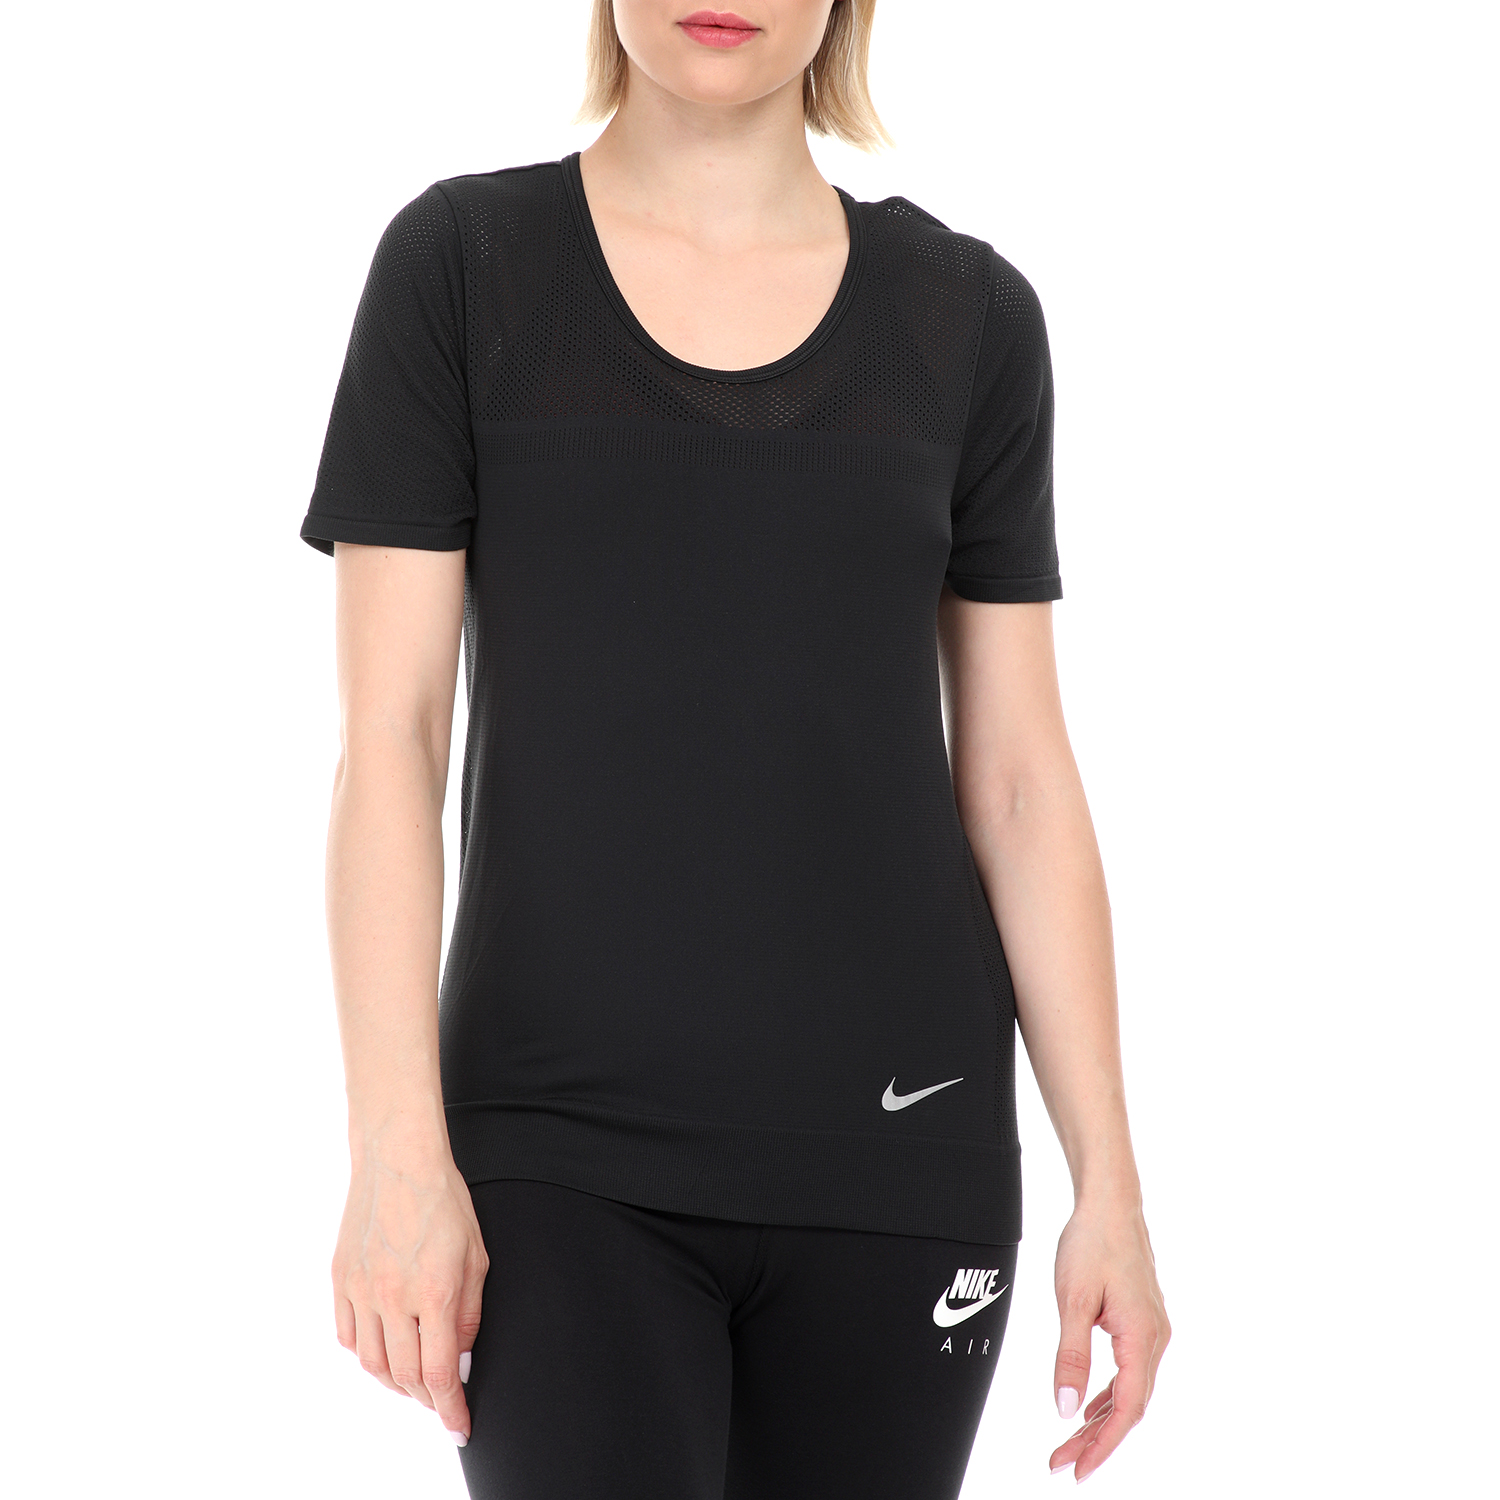 NIKE - Γυναικεία μπλούζα NIKE INFINITE μαύρη Γυναικεία/Ρούχα/Αθλητικά/T-shirt-Τοπ